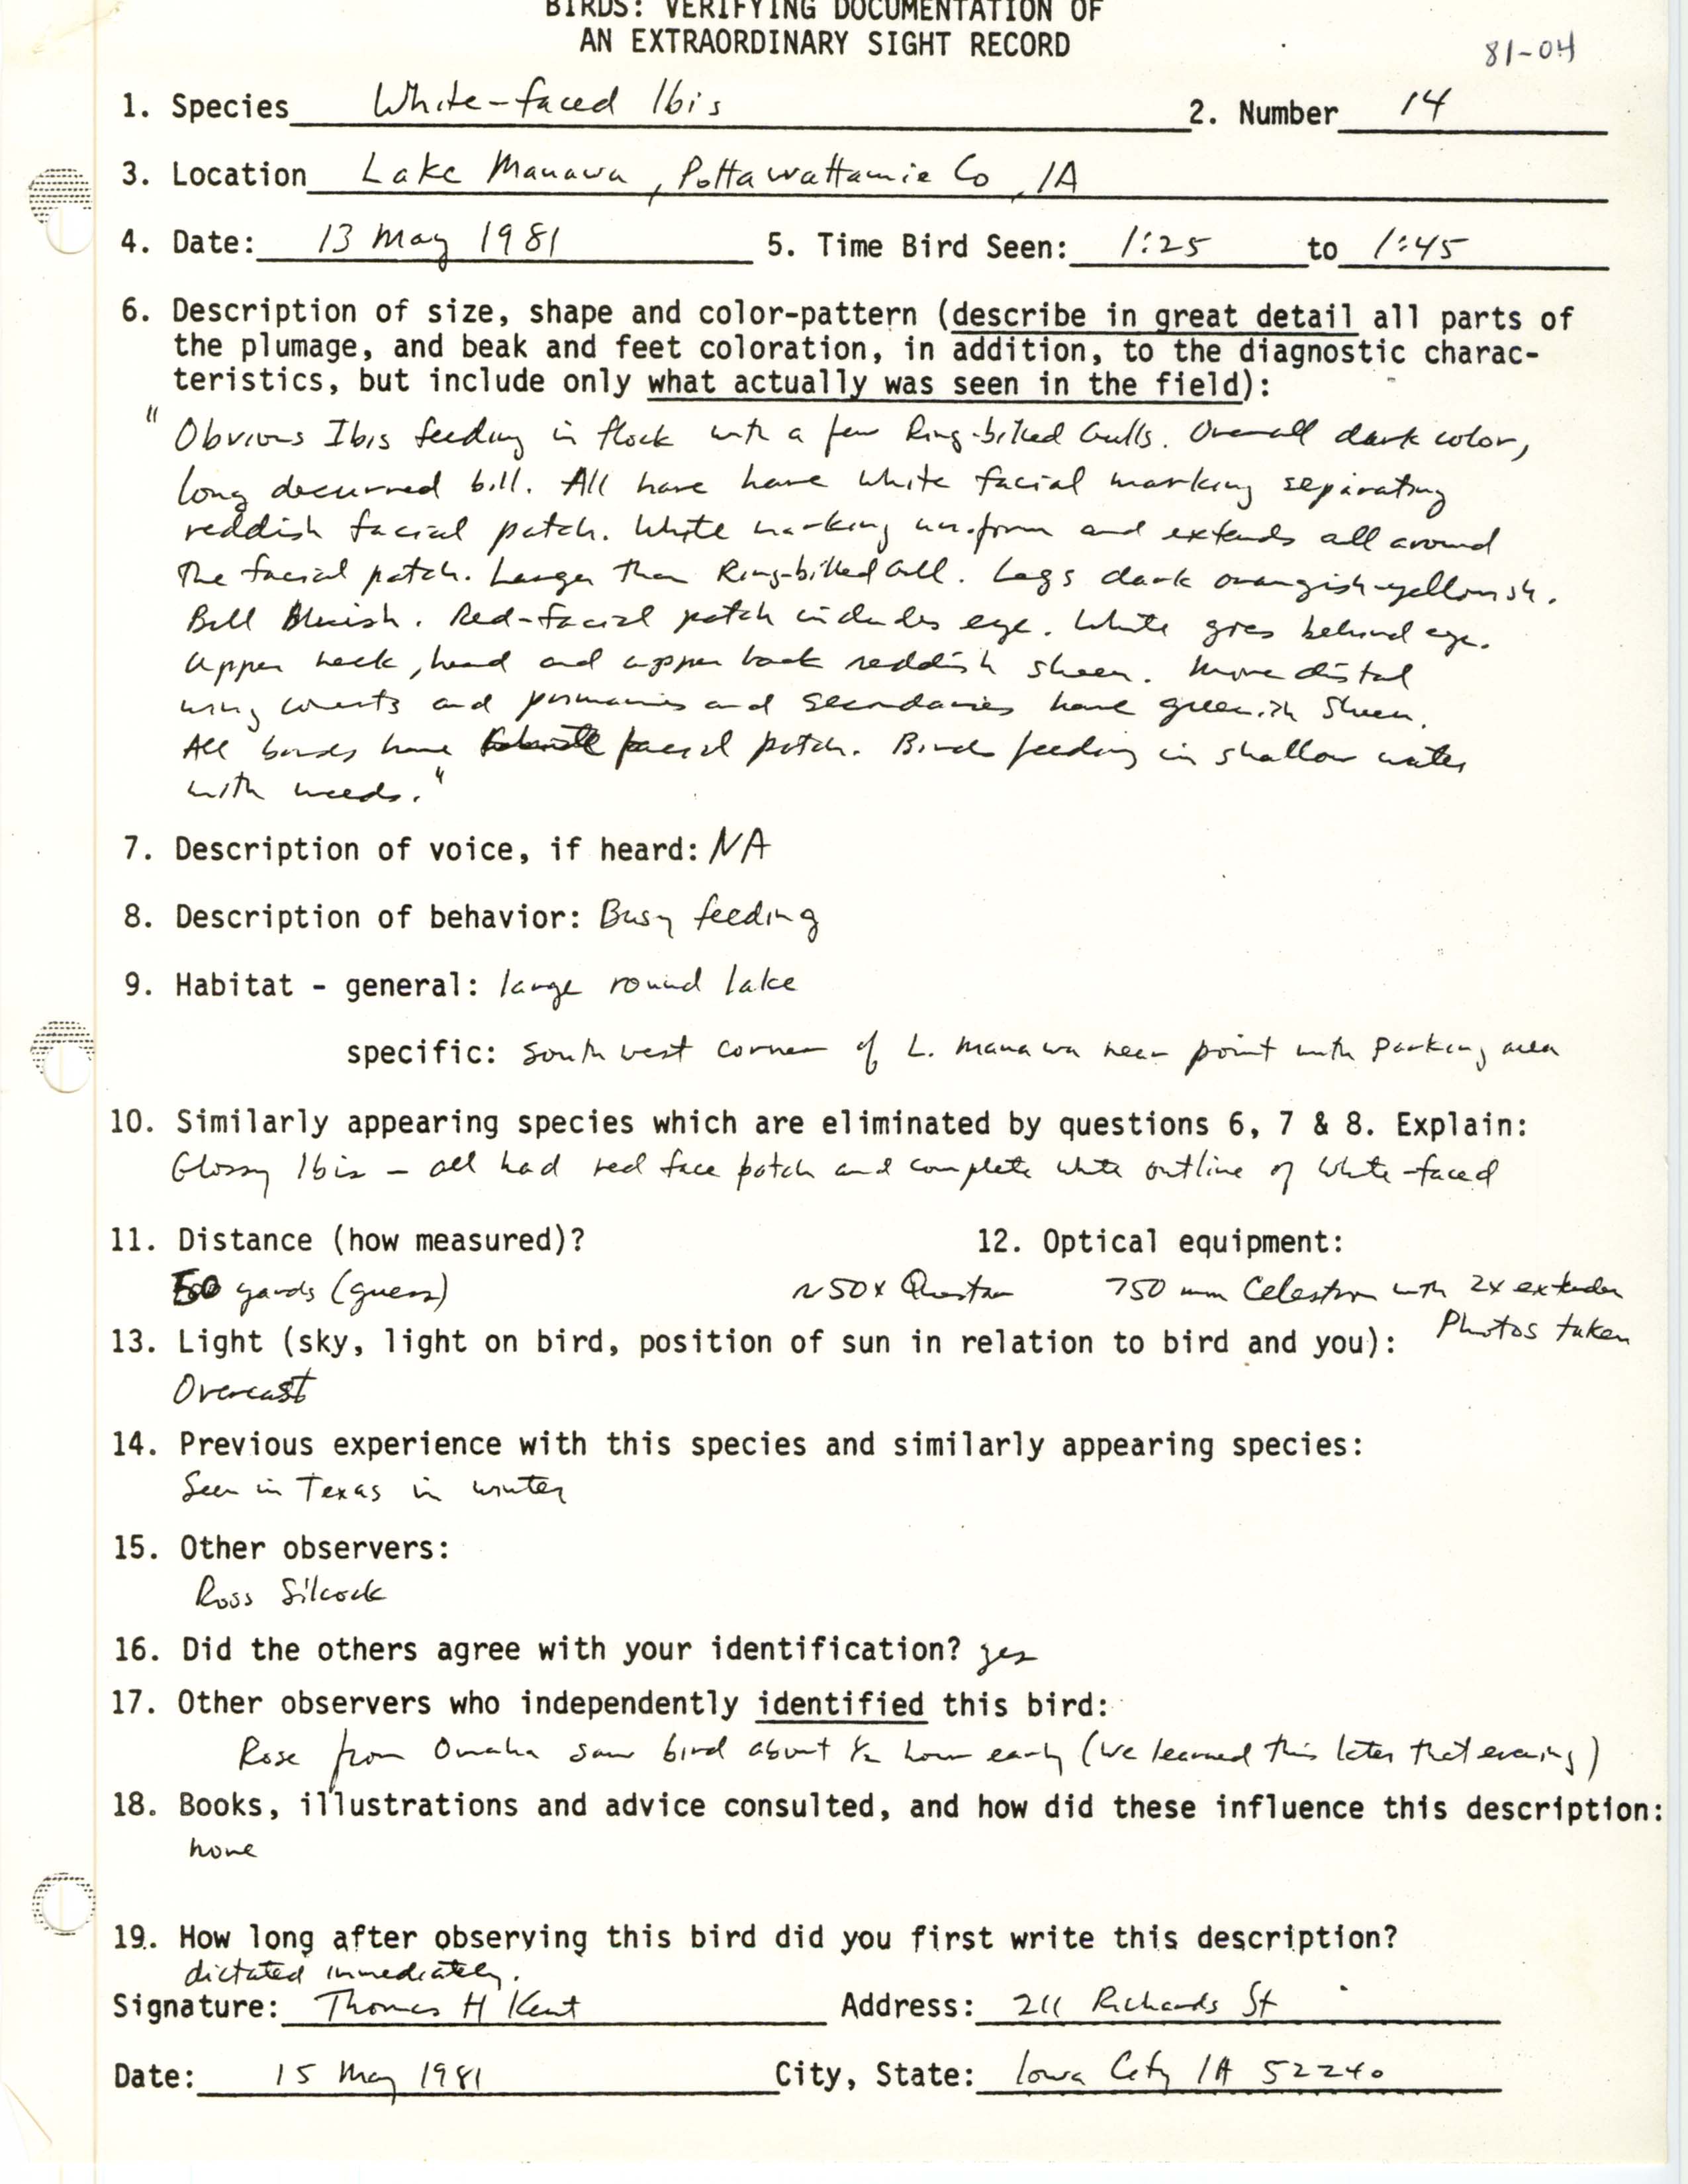 Rare bird documentation form for White-faced Ibis at Lake Manawa, 1981